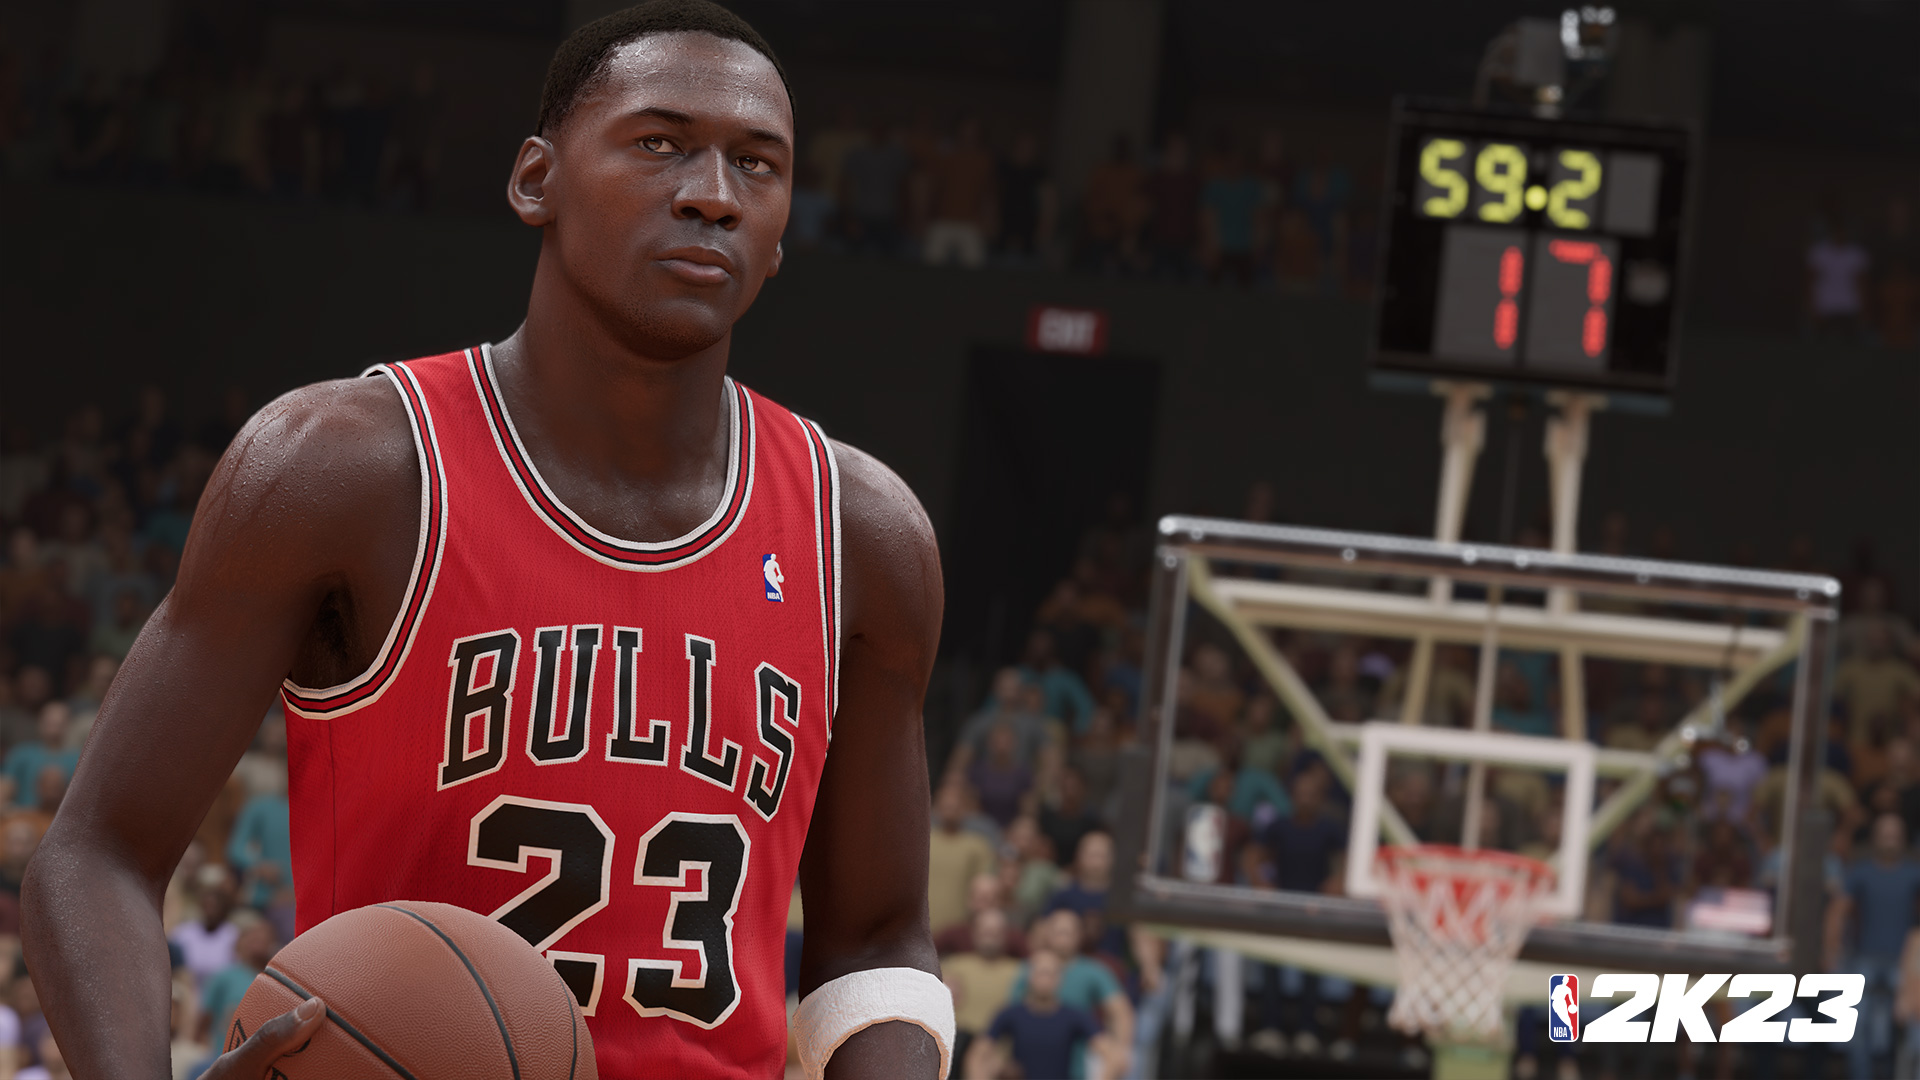 Hang time: Check out 23 epic Michael Jordan dunks